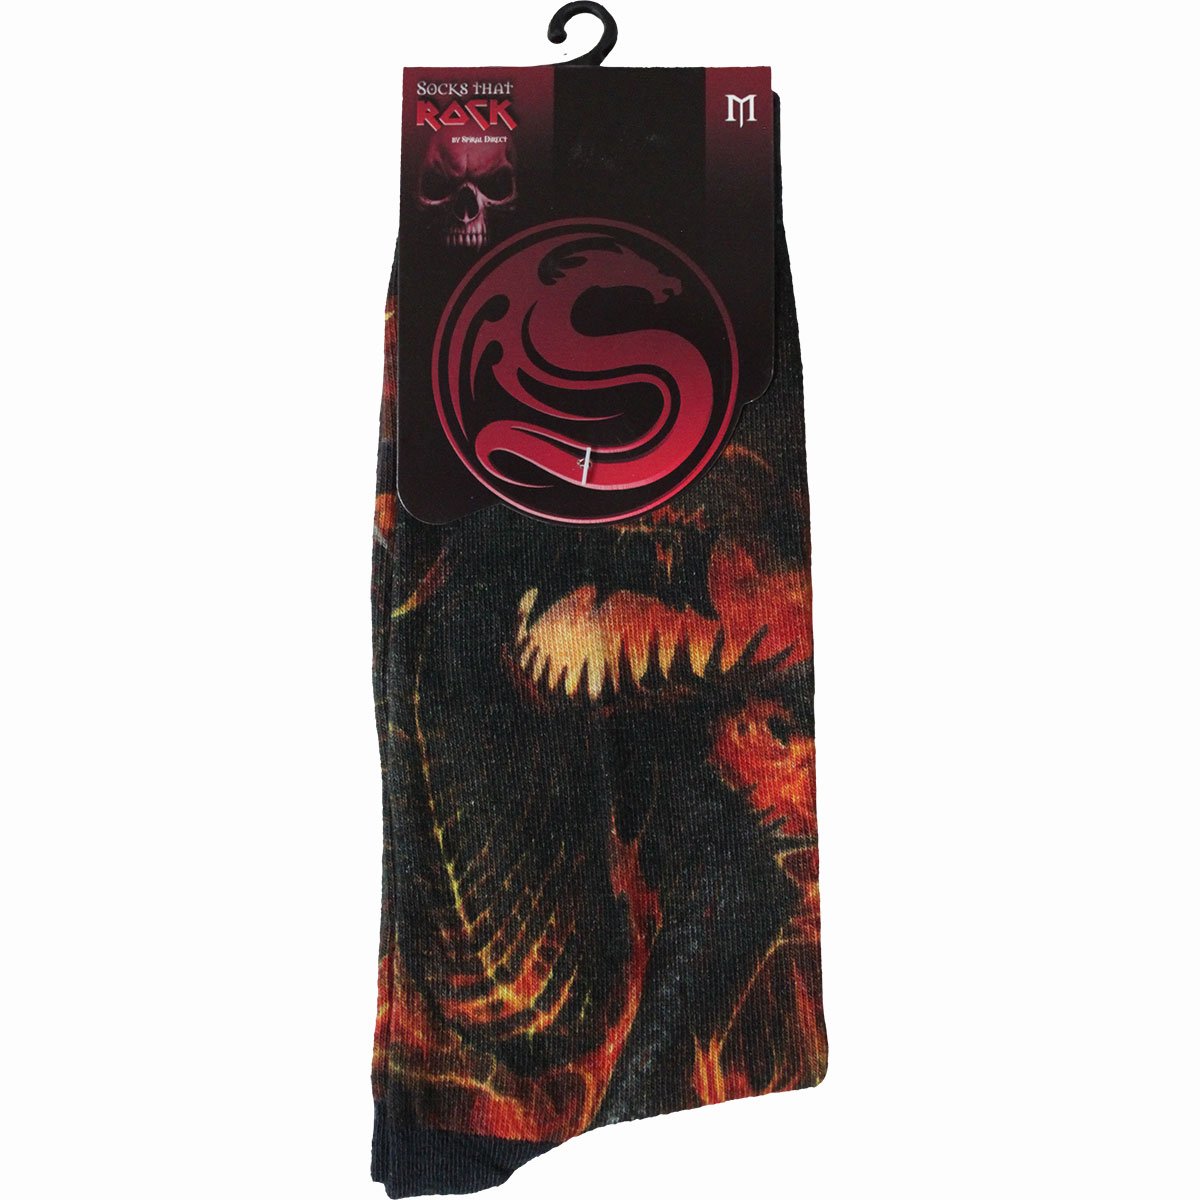 DRACONIS - Unisex Printed Socks - Spiral USA